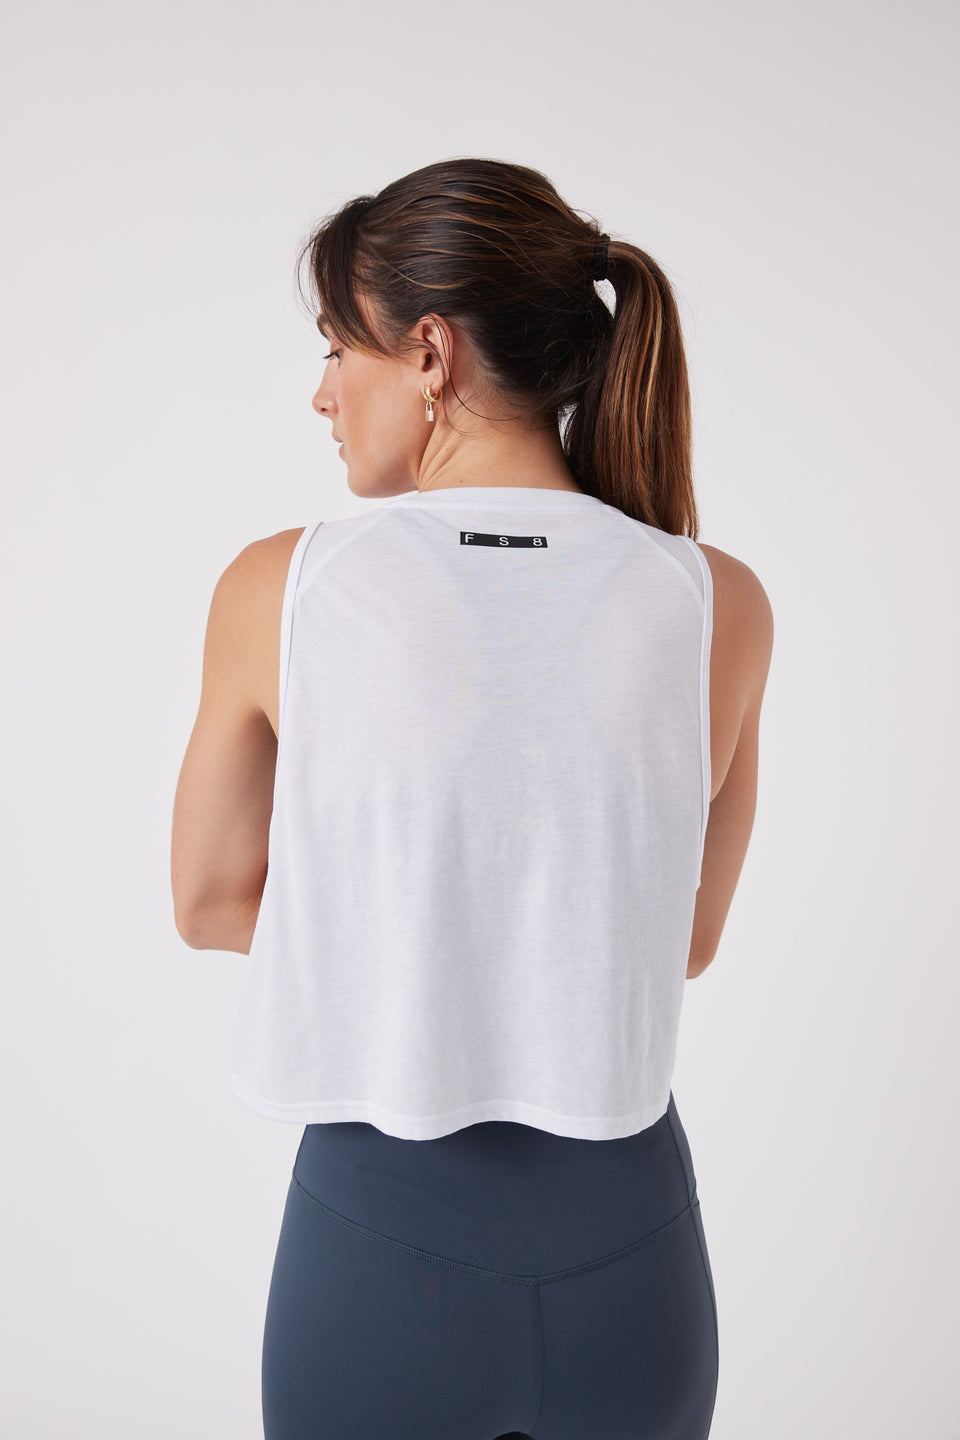 FS8 Merchandise Women's Oxy Cropped Tank - White